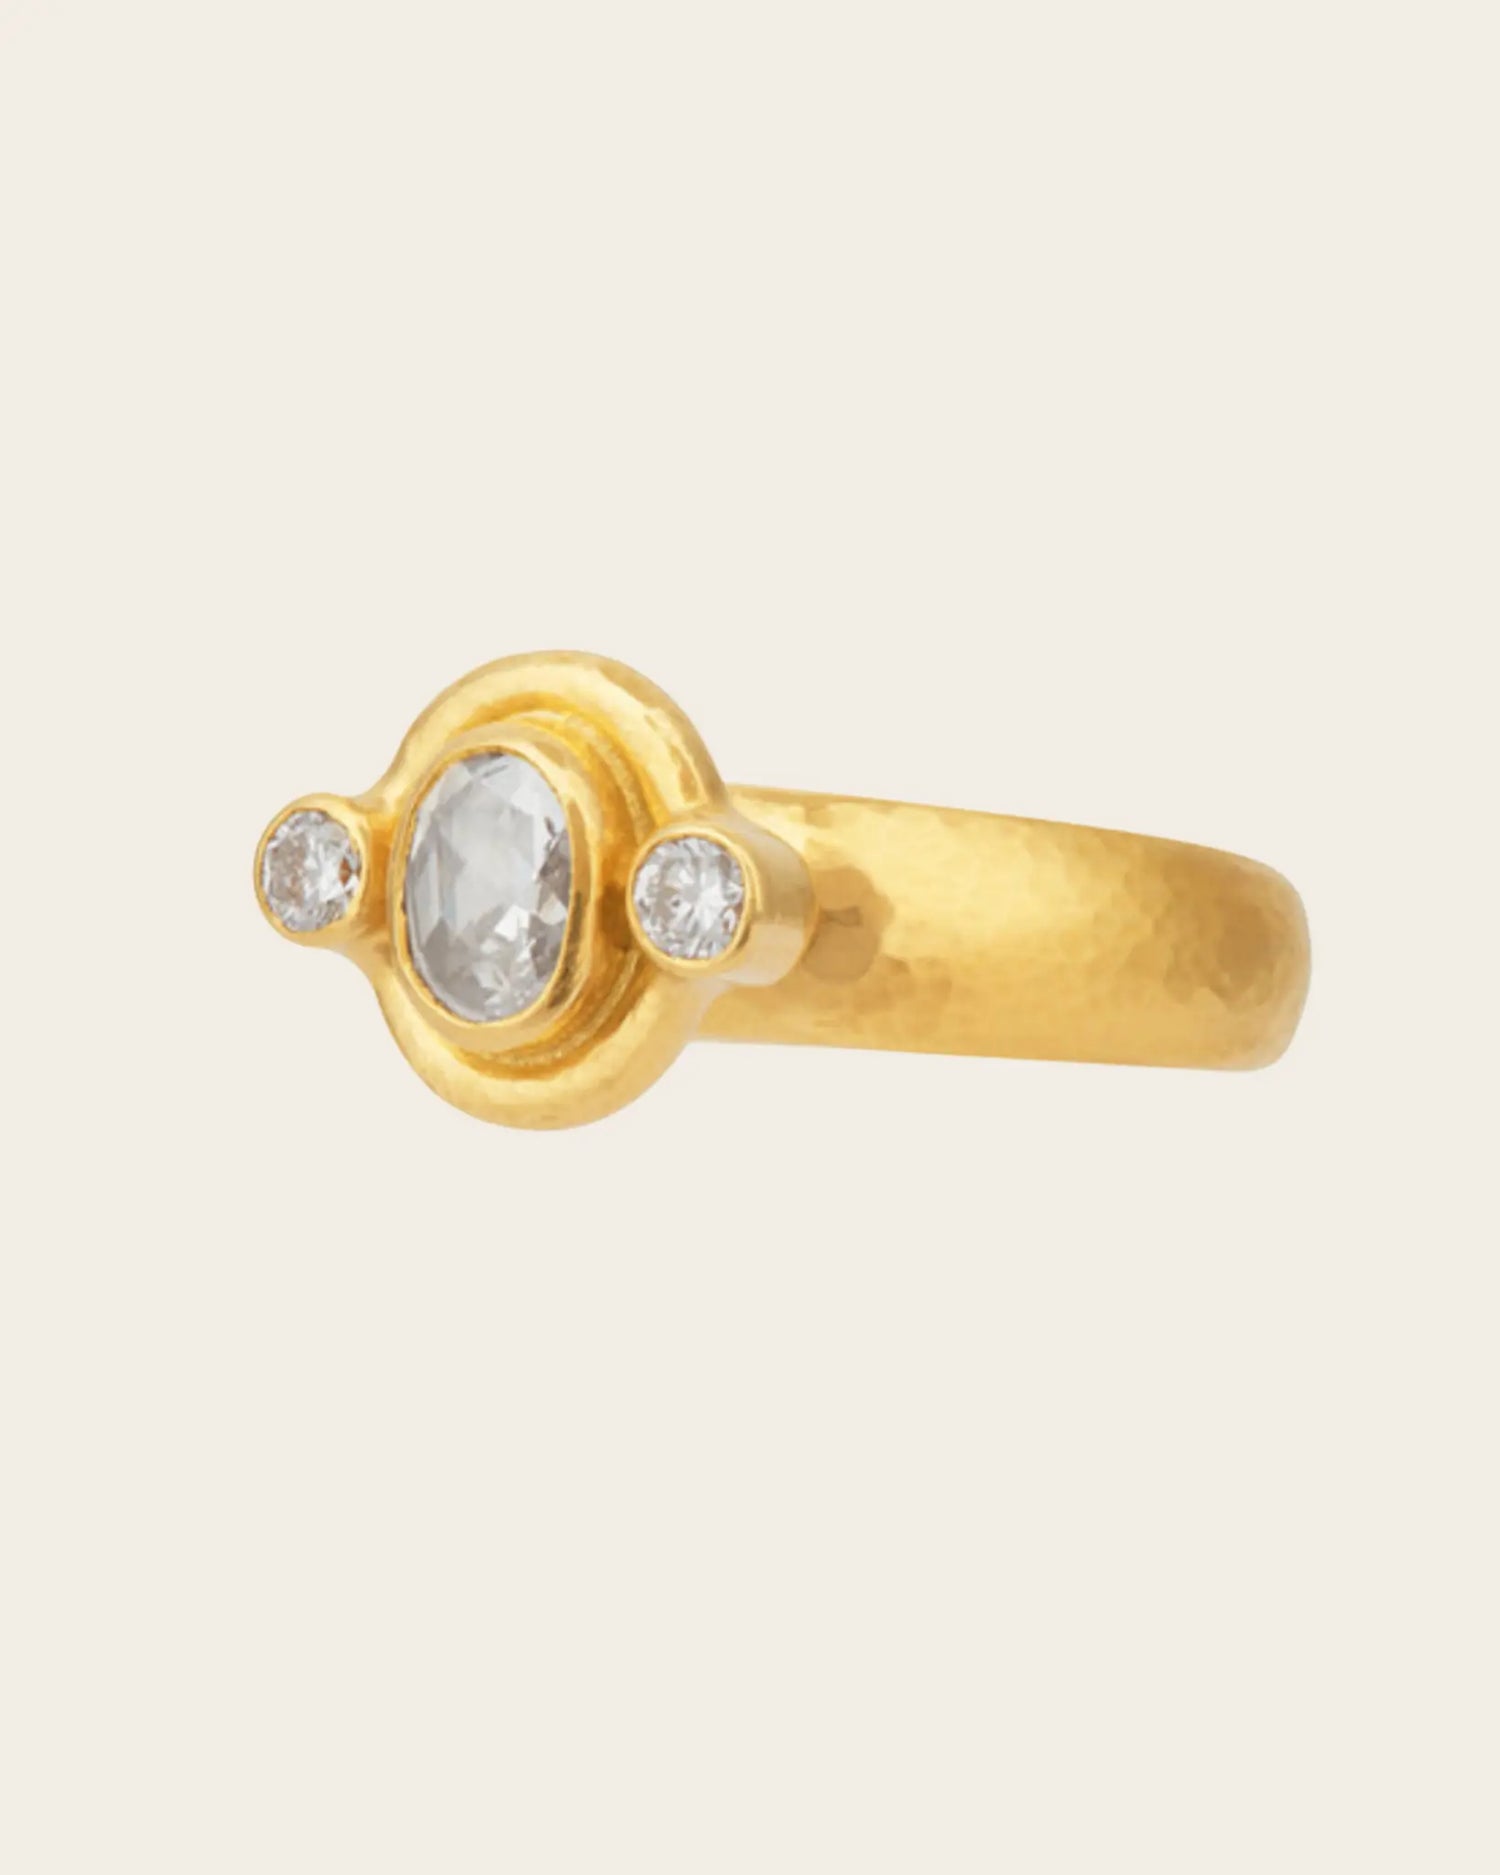 OOAK Diamond Ring OOAK Diamond Ring Gurhan Gurhan  Squash Blossom Vail